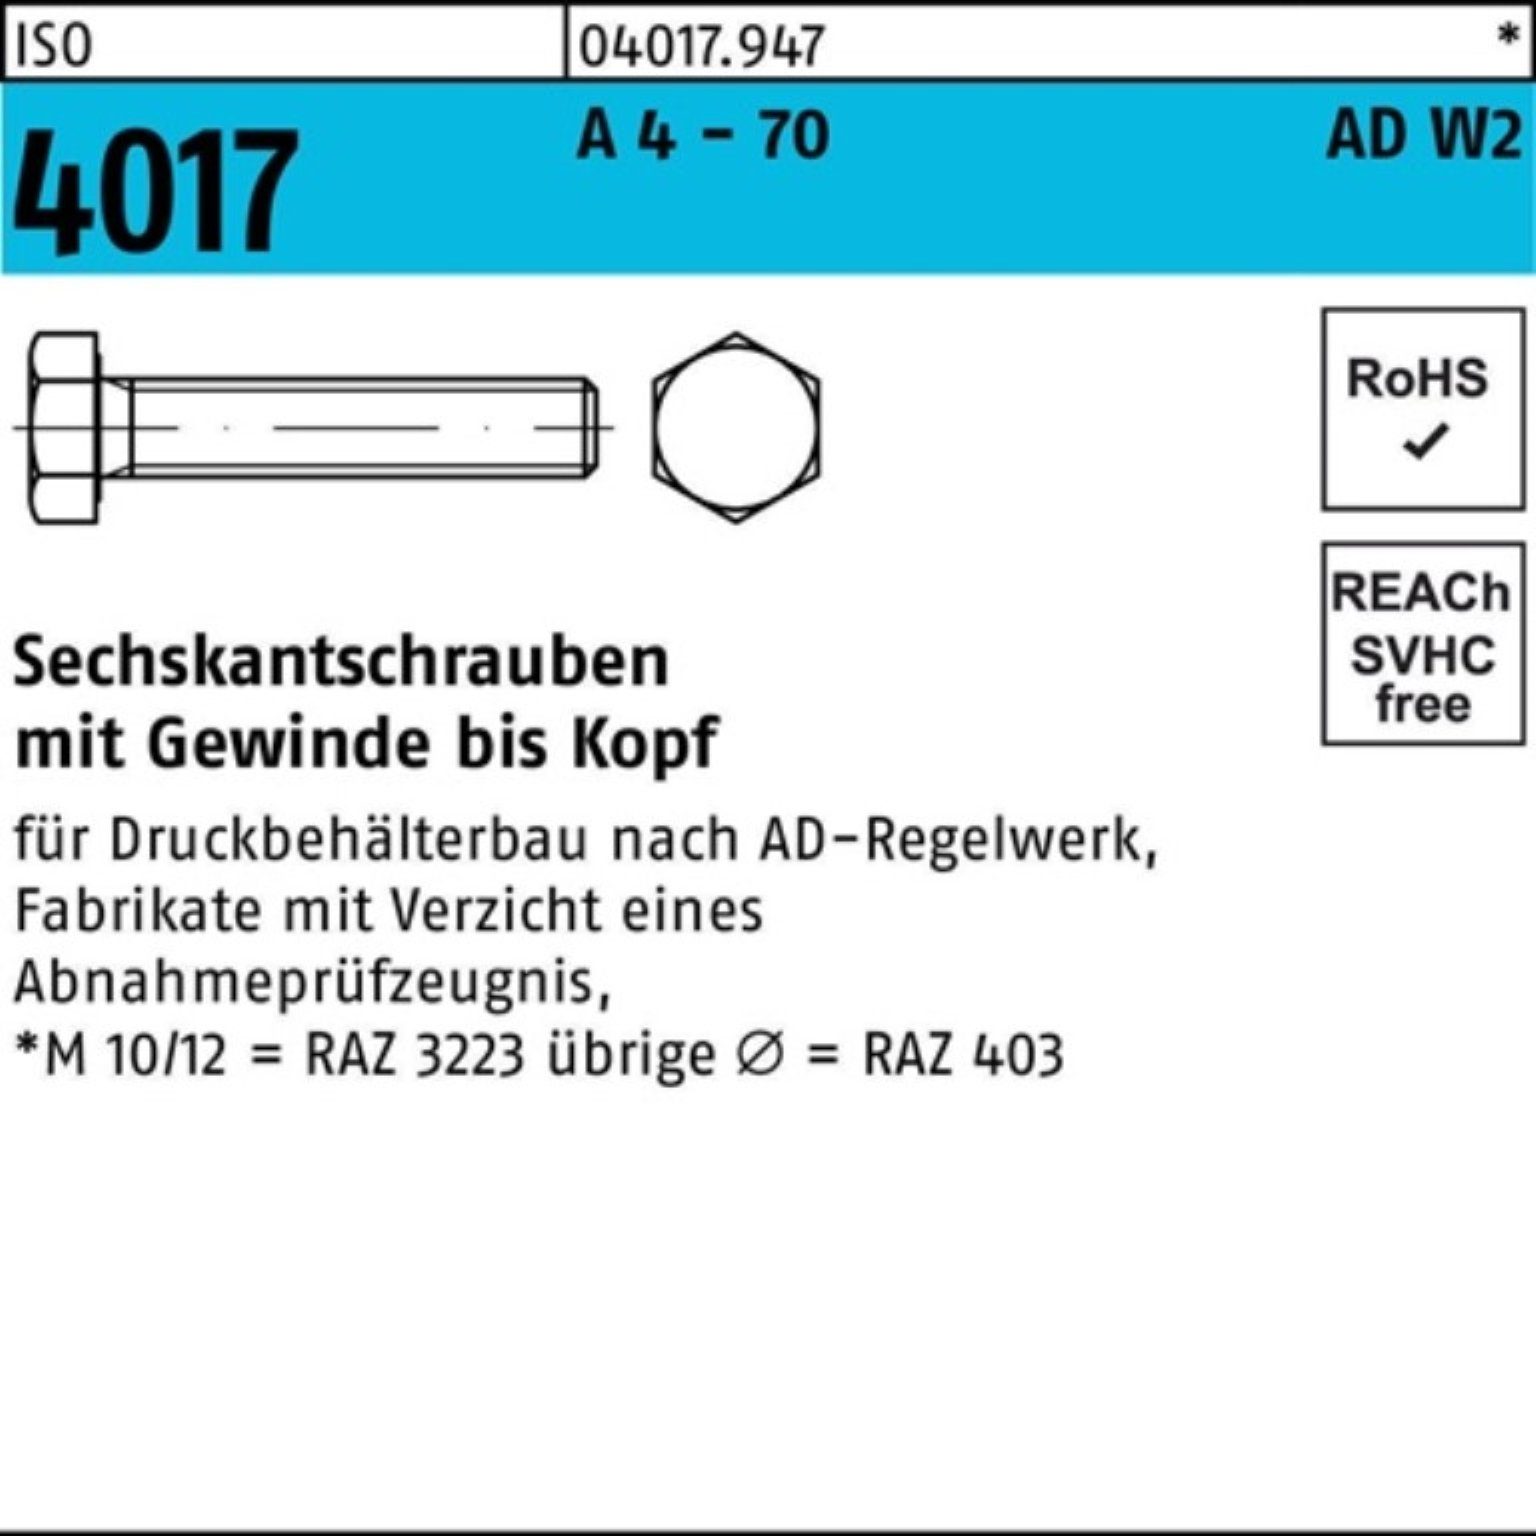 Bufab Sechskantschraube 100er Pack Sechskantschraube St 35 M10x - 100 AD-W2 70 VG A 4 ISO 4017